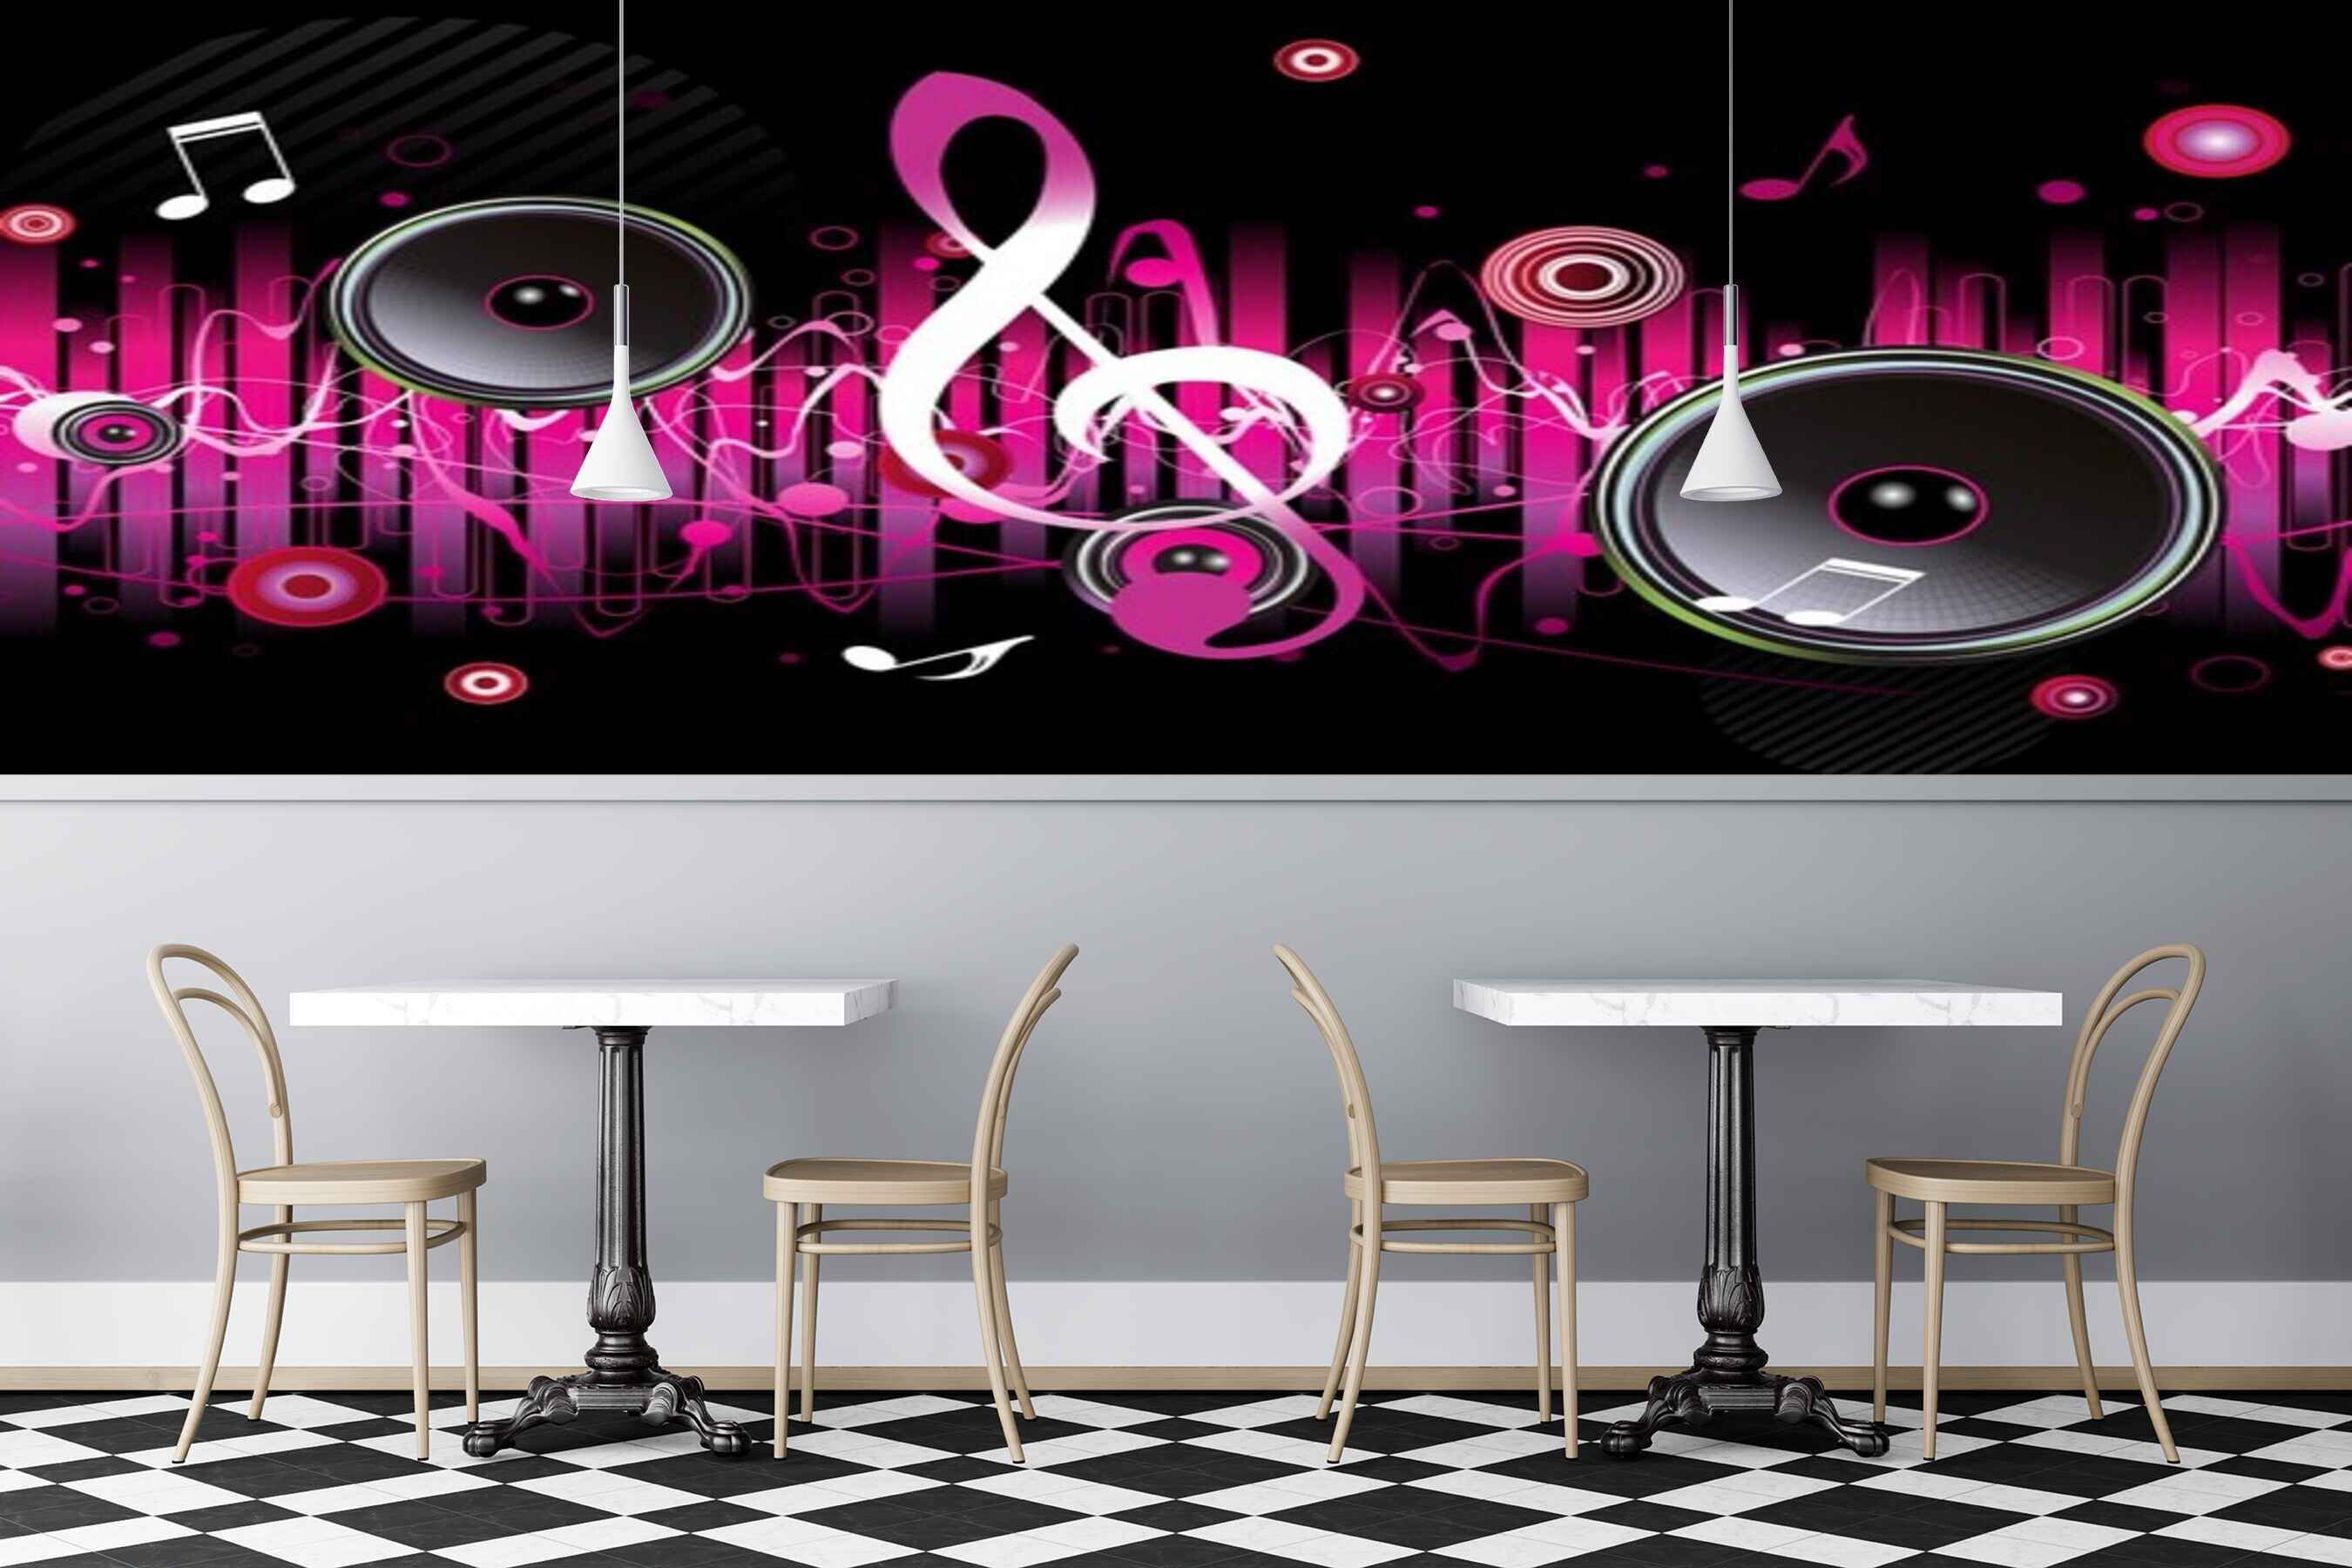 Avikalp MWZ3527 Pink Black Musical Signs Mics HD Wallpaper for Disco Club Karaoke